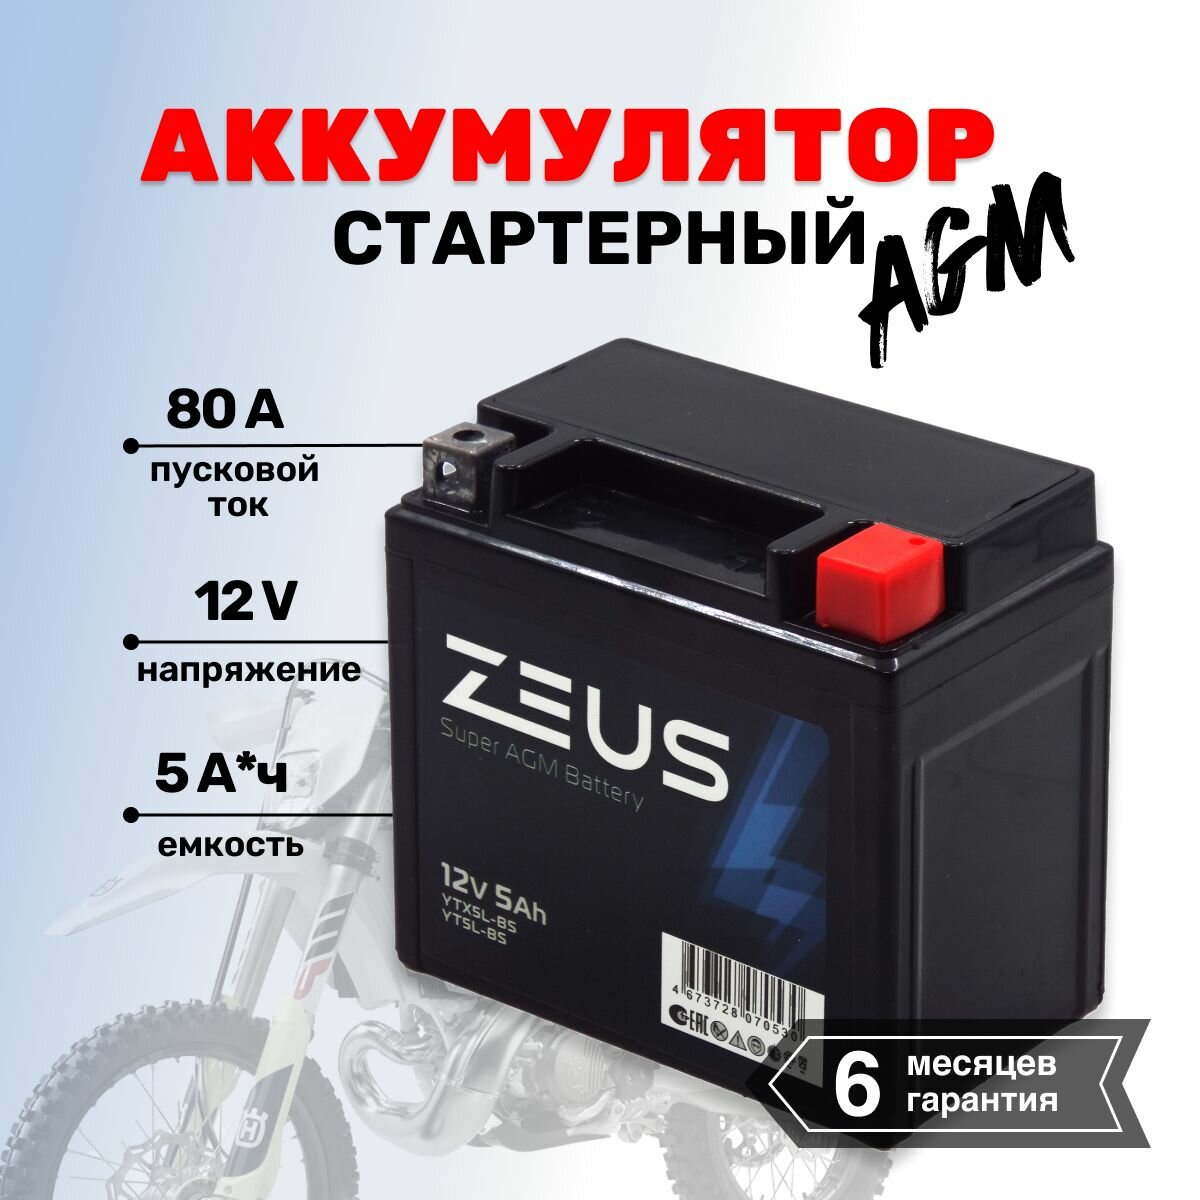 Аккумулятор стартерный гелевый для мотоцикла/квадроцикла/скутера ZEUS SUPER AGM 5 А*ч о. п. Обратная полярность (YTX5L-BS, UTX5L-BS, CT 1205)